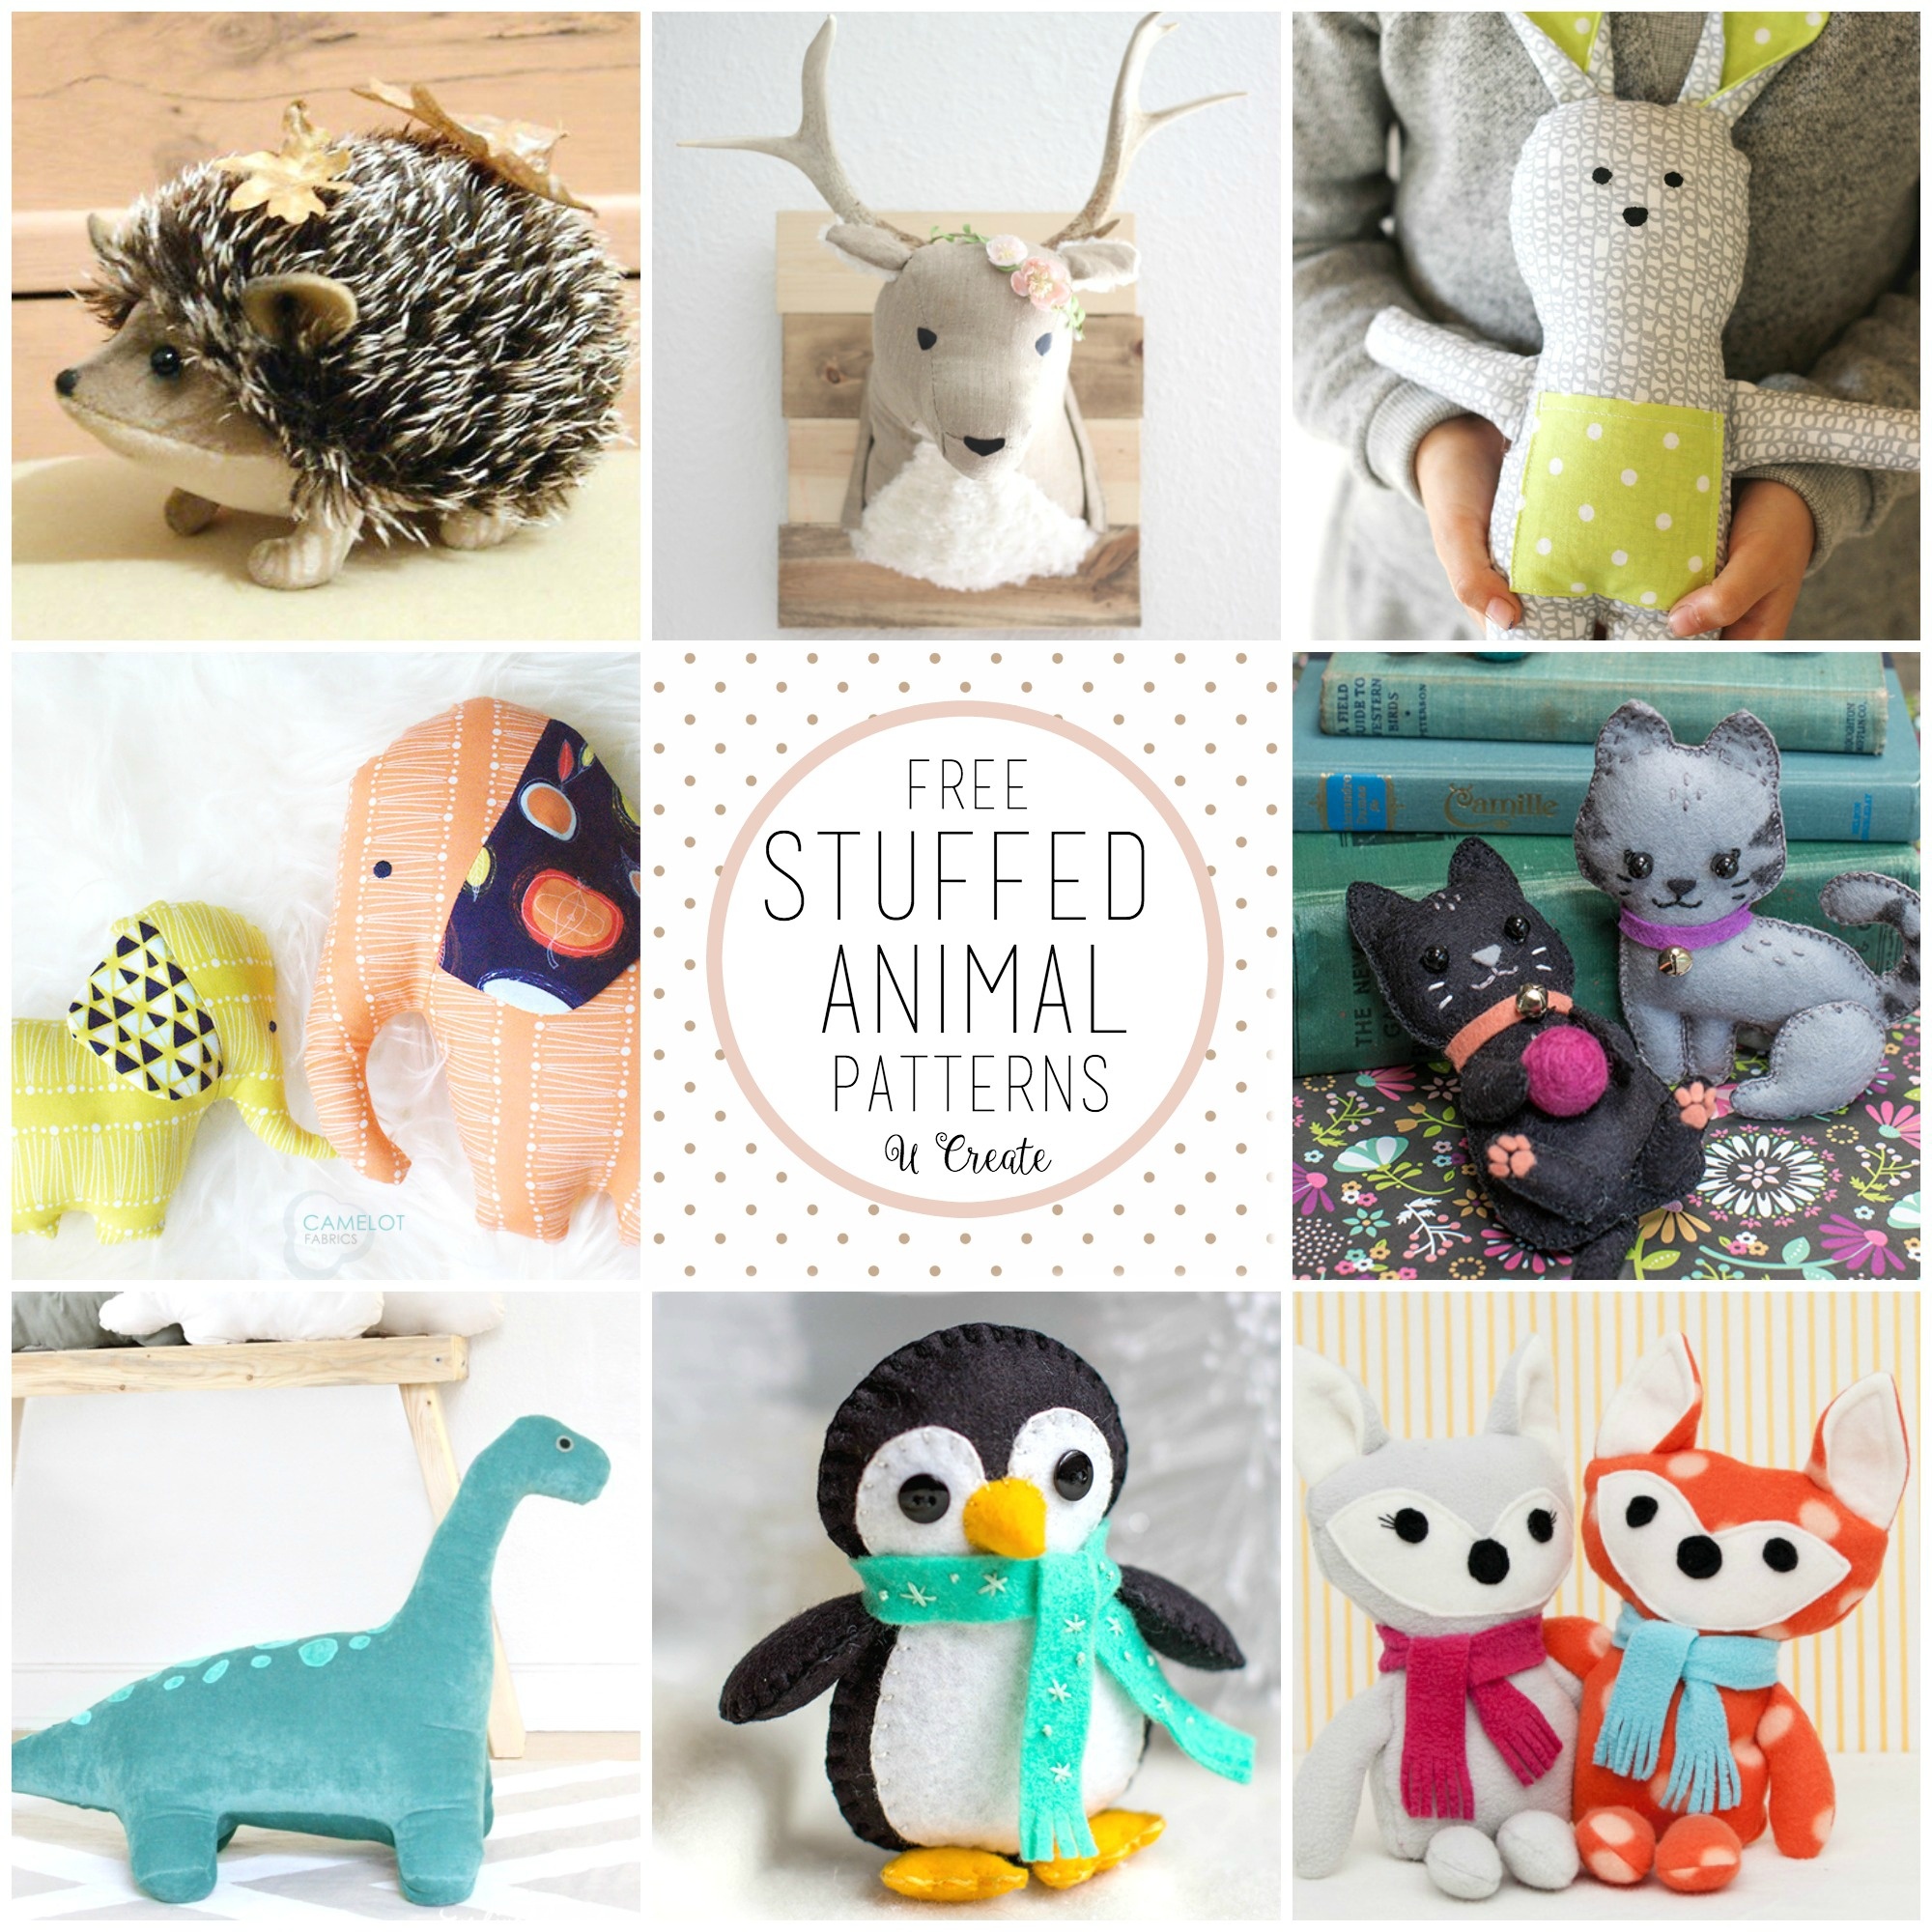 Free Stuffed Animal Patterns - The Cutest! - U Create - Free Printable Stuffed Animal Patterns